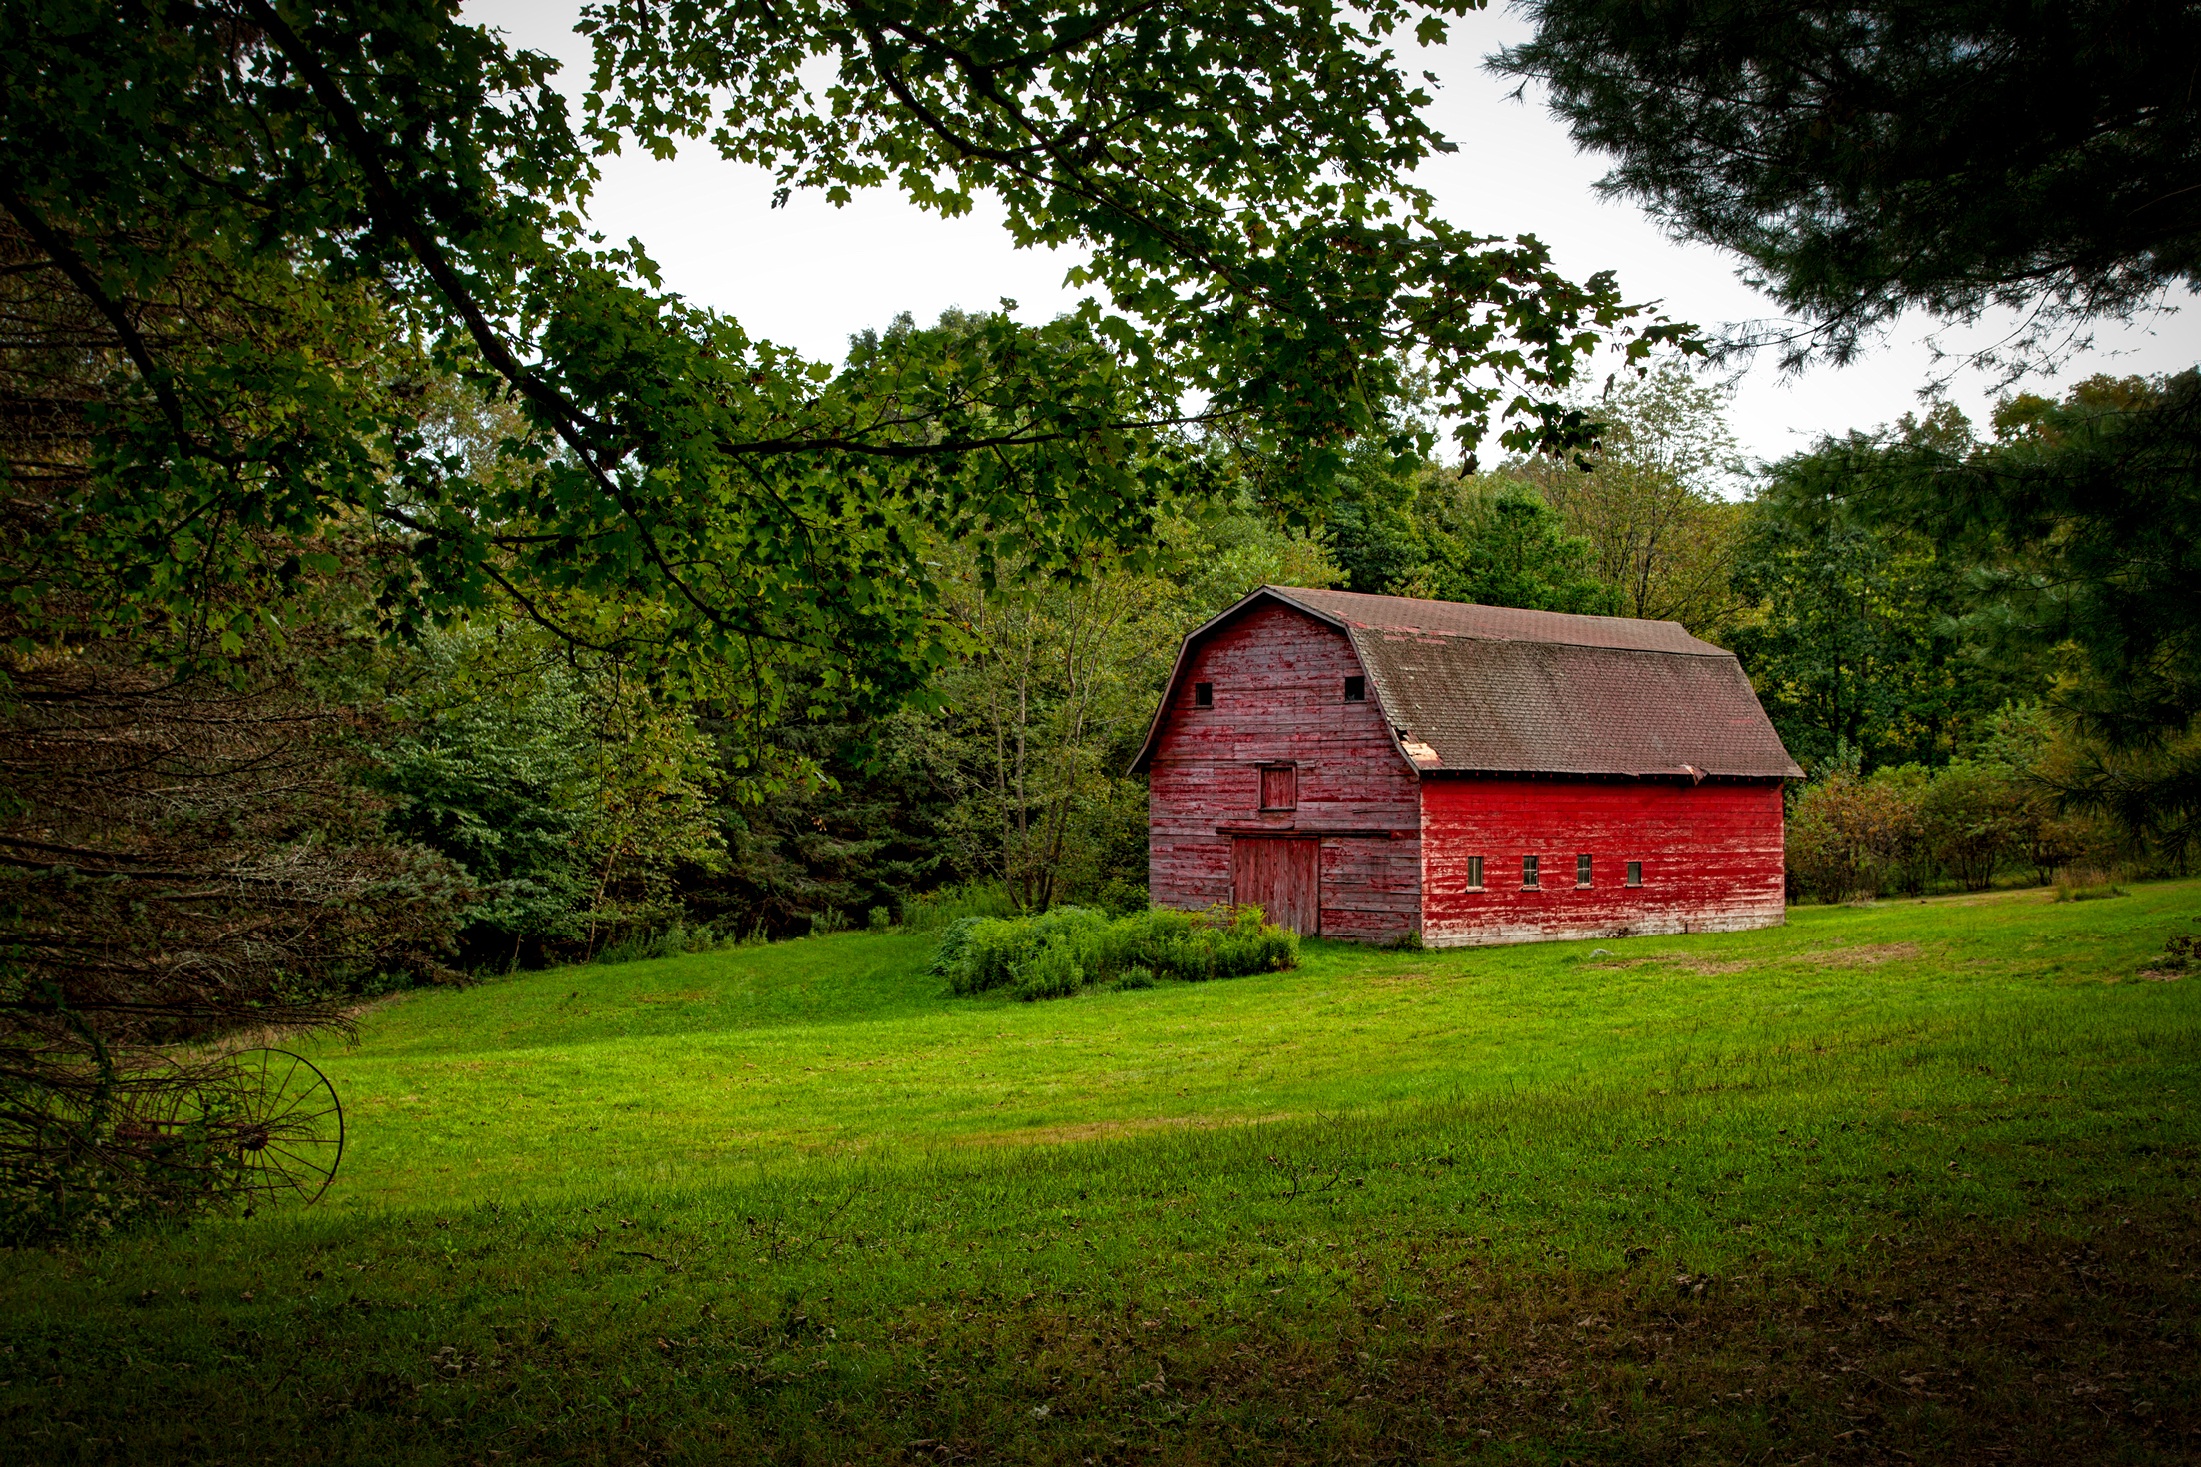 Rustic old barn in Connecticut farmland USA by 12019